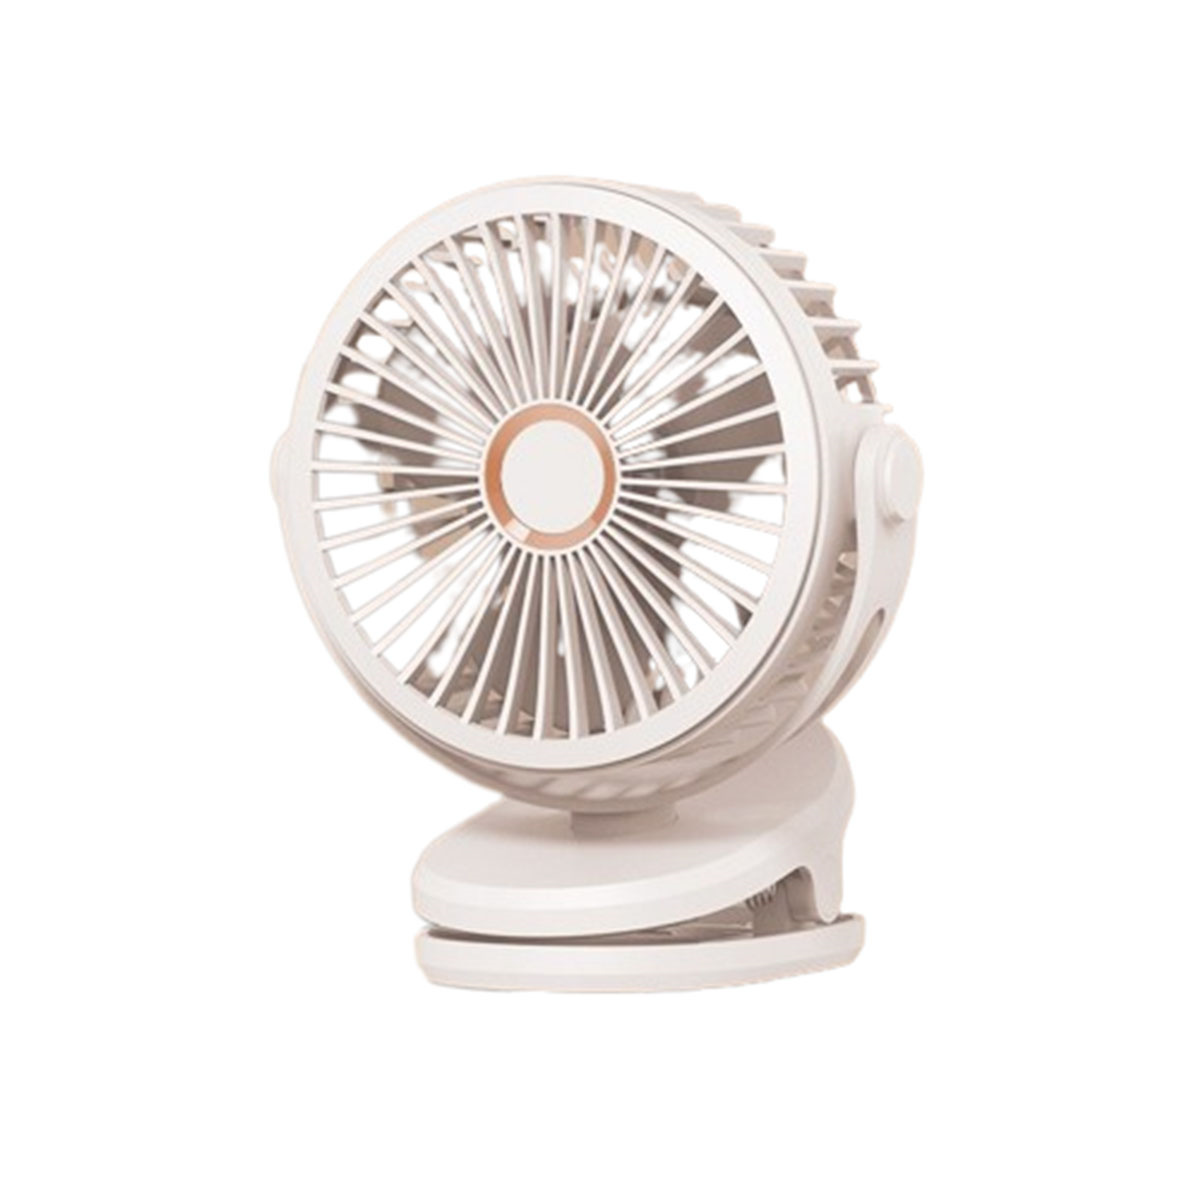 SYNTEK weiß clip wiederaufladbar Fan tragbar mute schüttelkopf usb mini sturm Weiß Ventilator kleiner ventilator